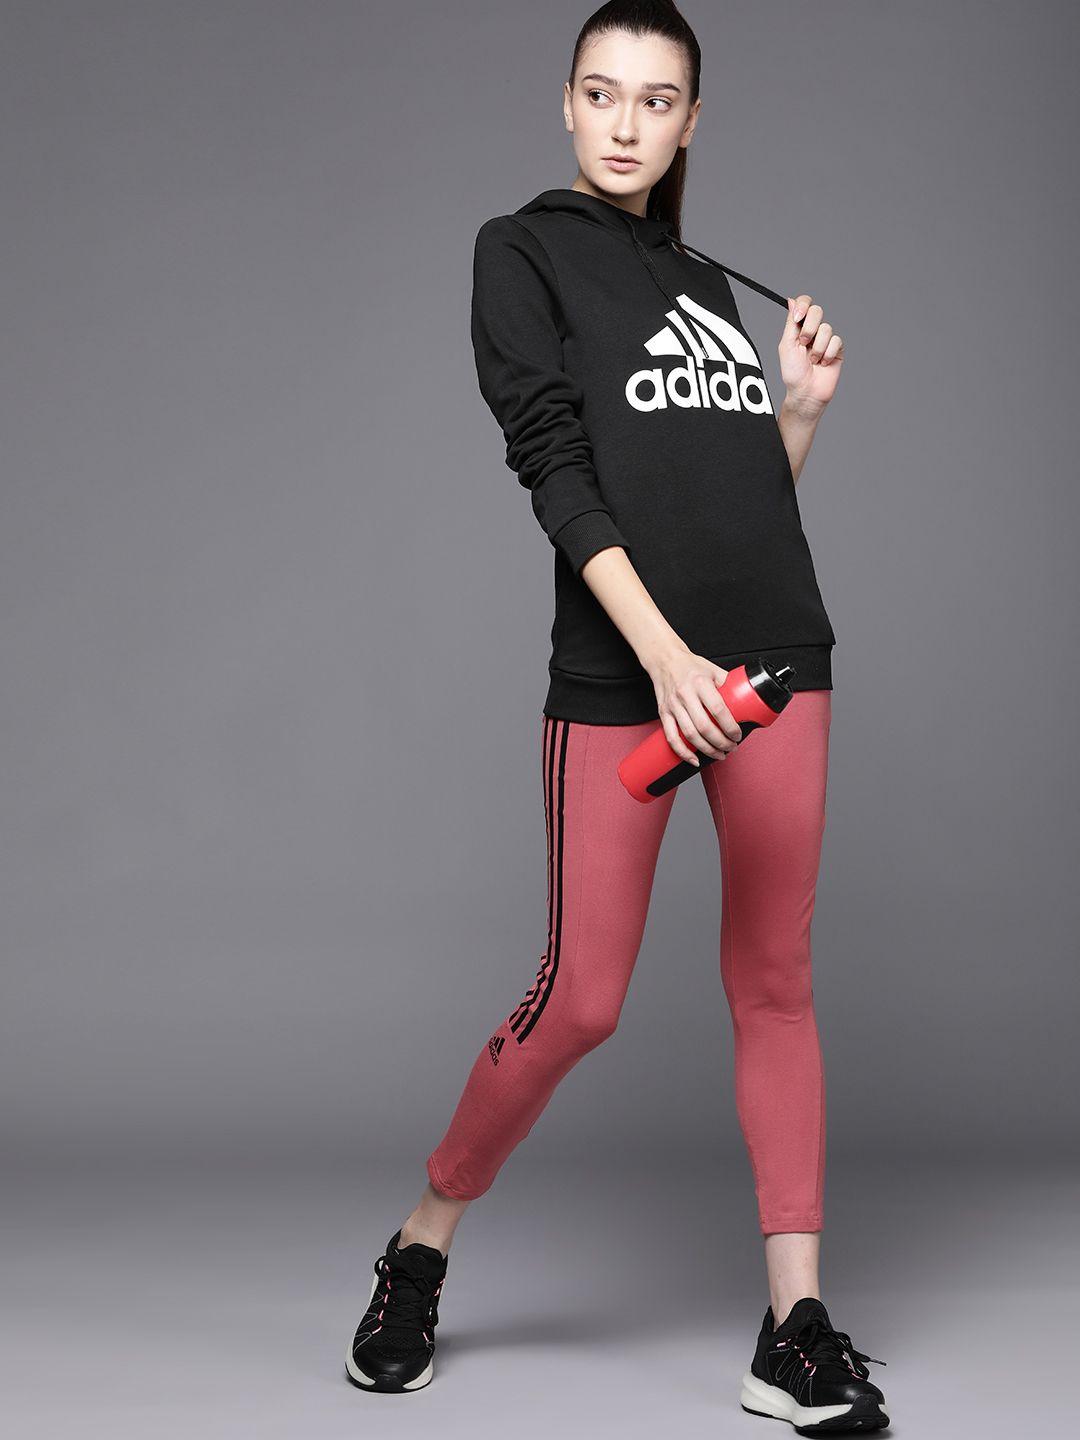 adidas-women-black-&-white-brand-logo-printed-hooded-sweatshirt